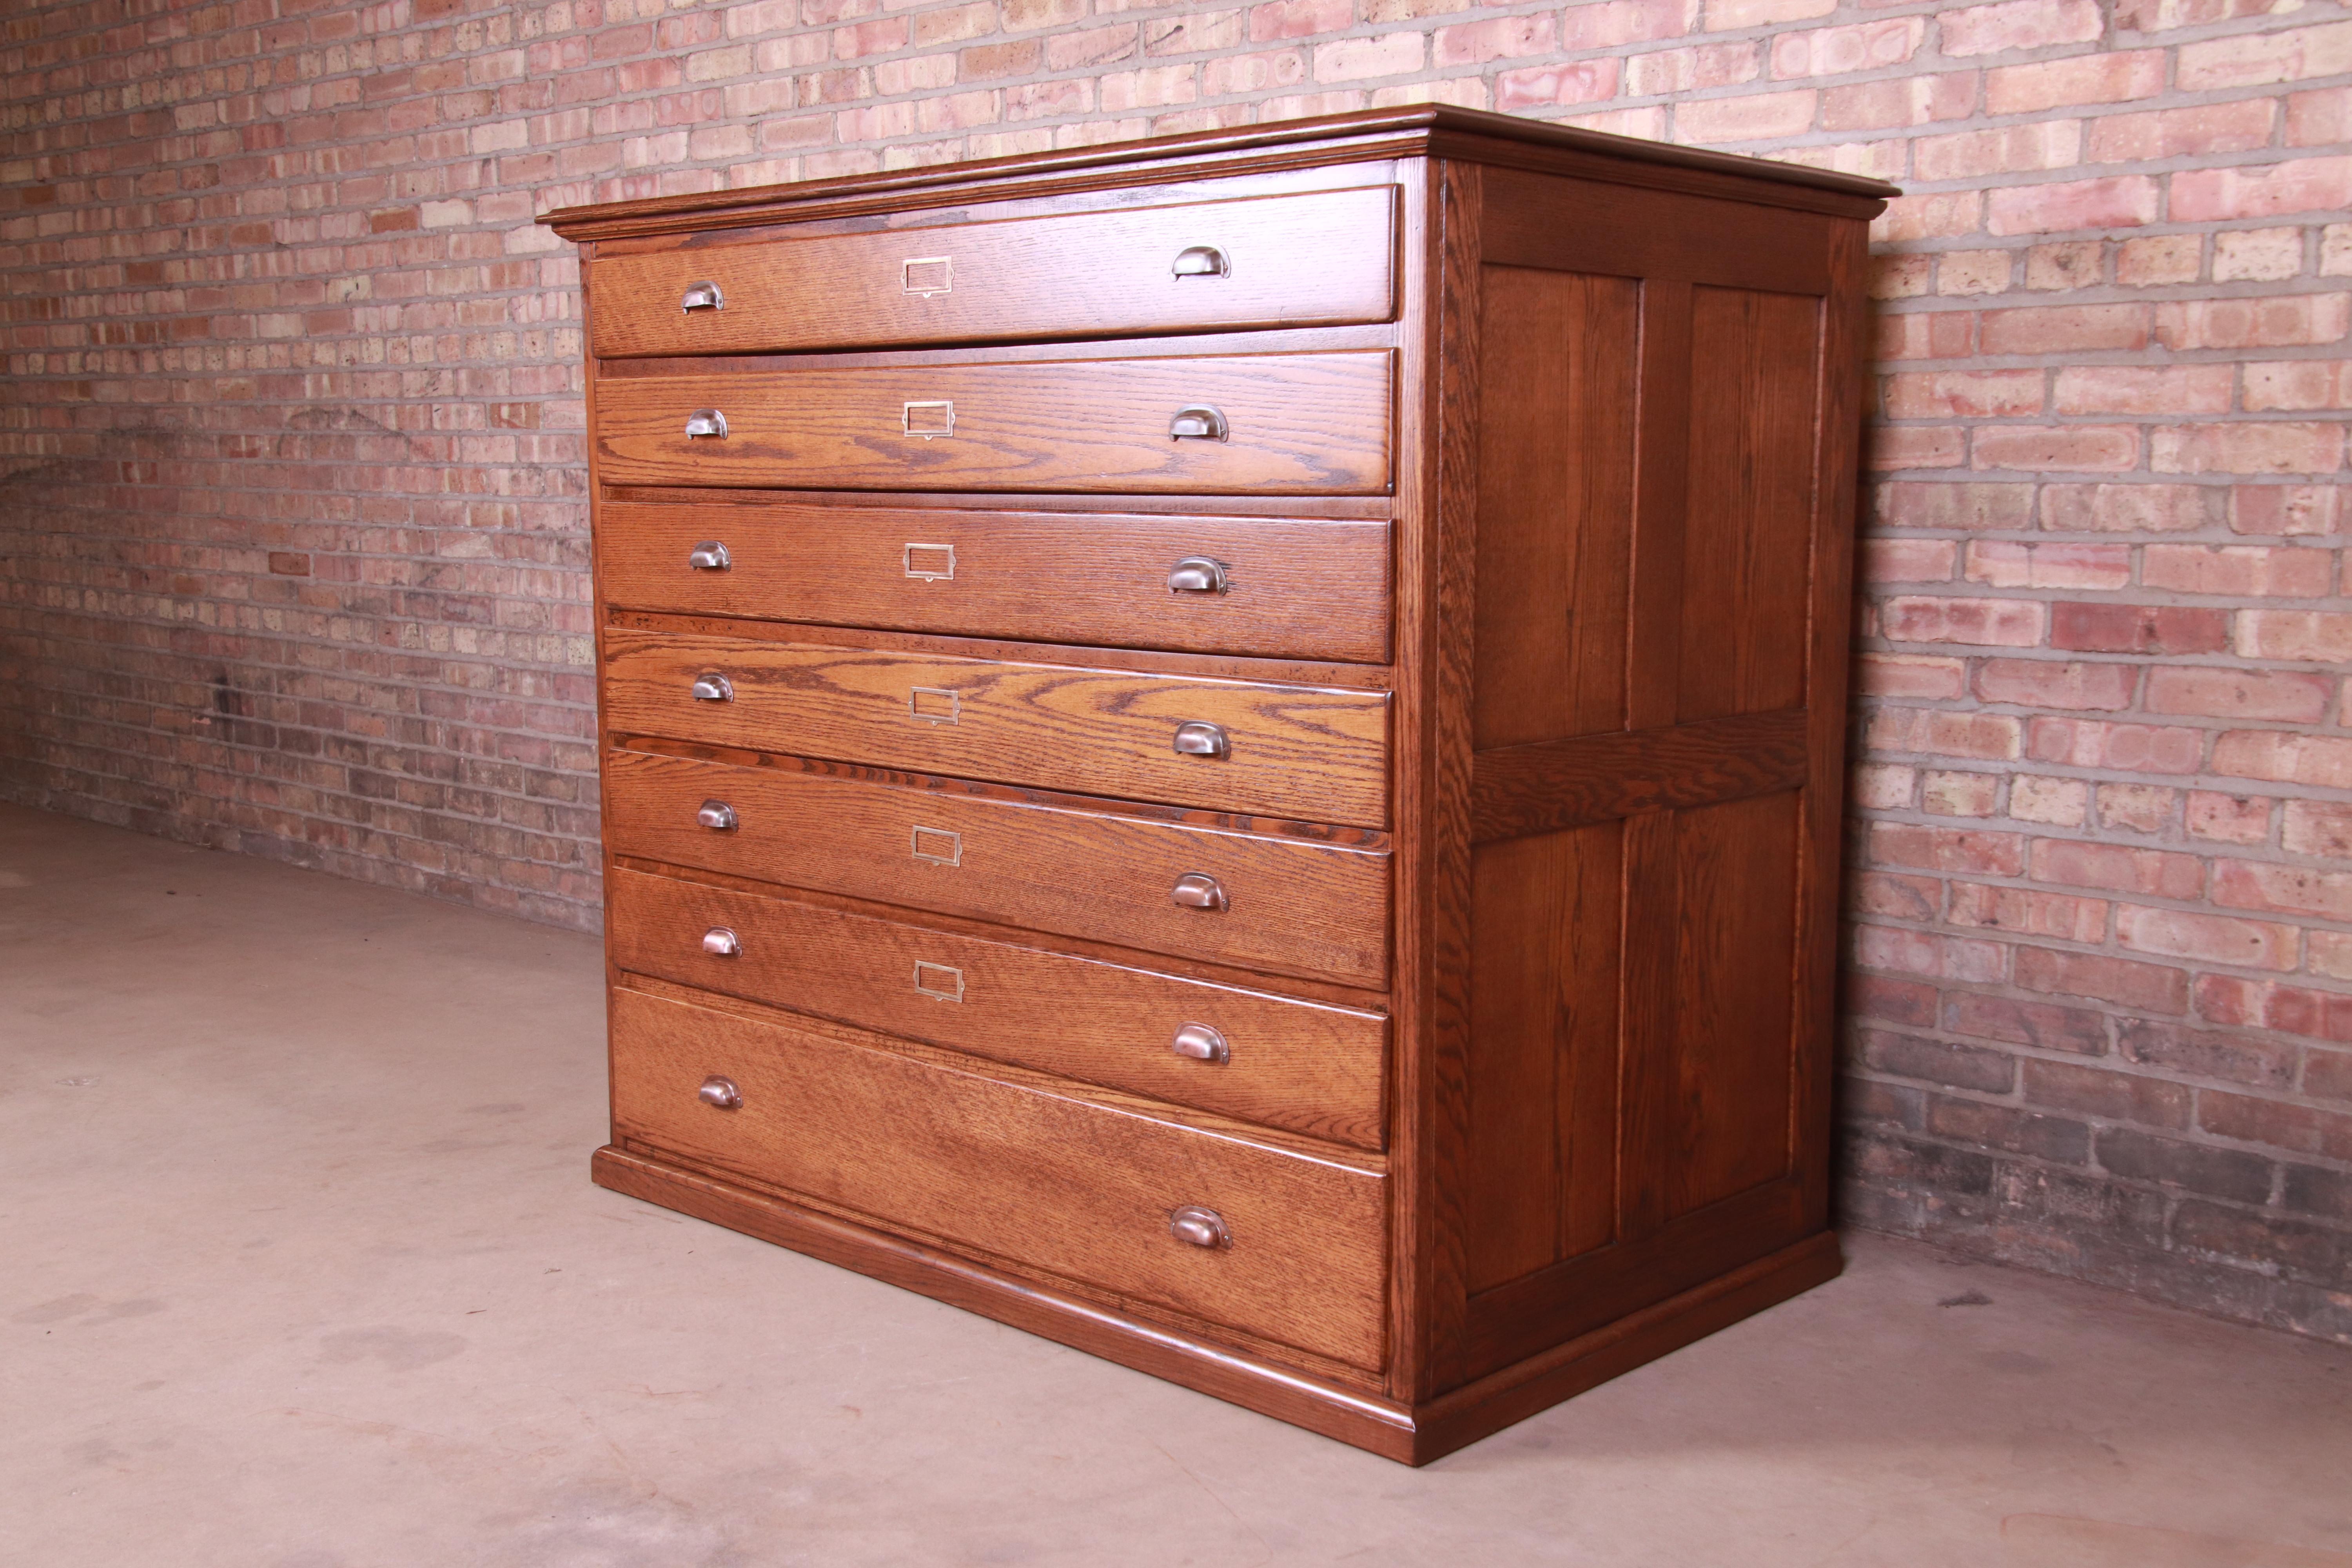 American Antique Arts & Crafts Oak Architect's Blueprint Flat File Cabinet, Refinished